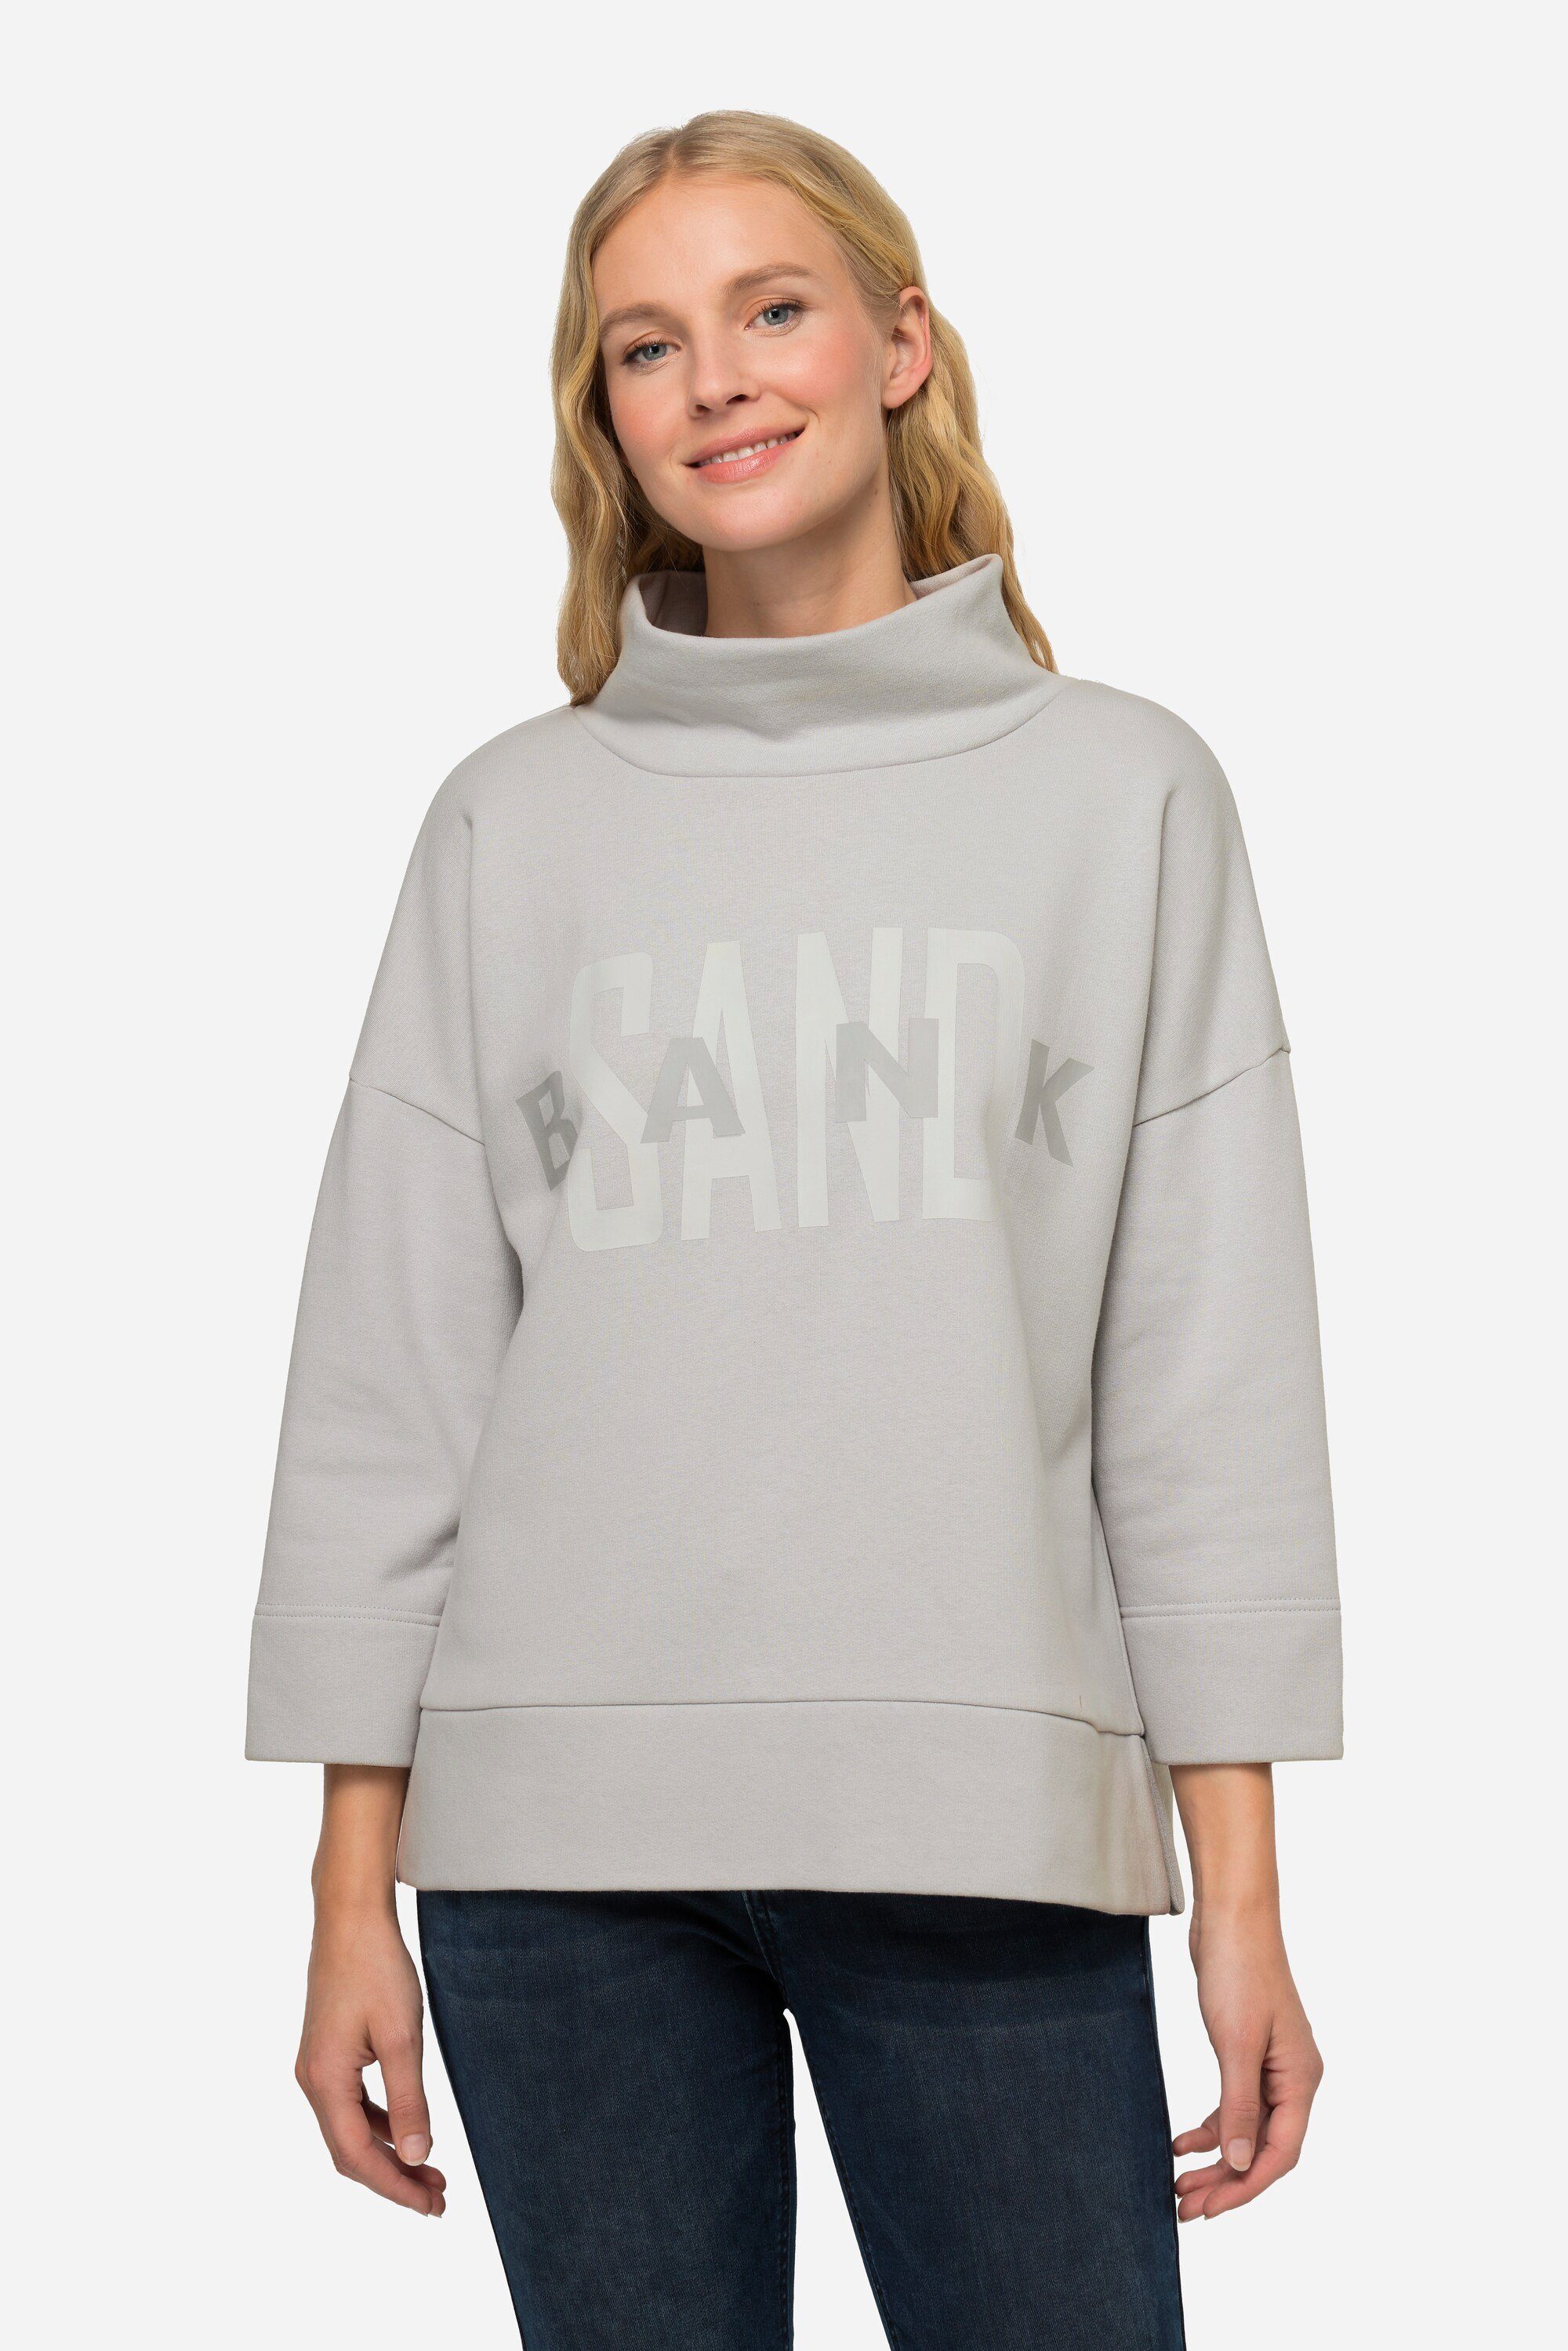 Laurasøn Sweatshirt Sweatshirt oversized SANDBANK-Druck Stehkragen